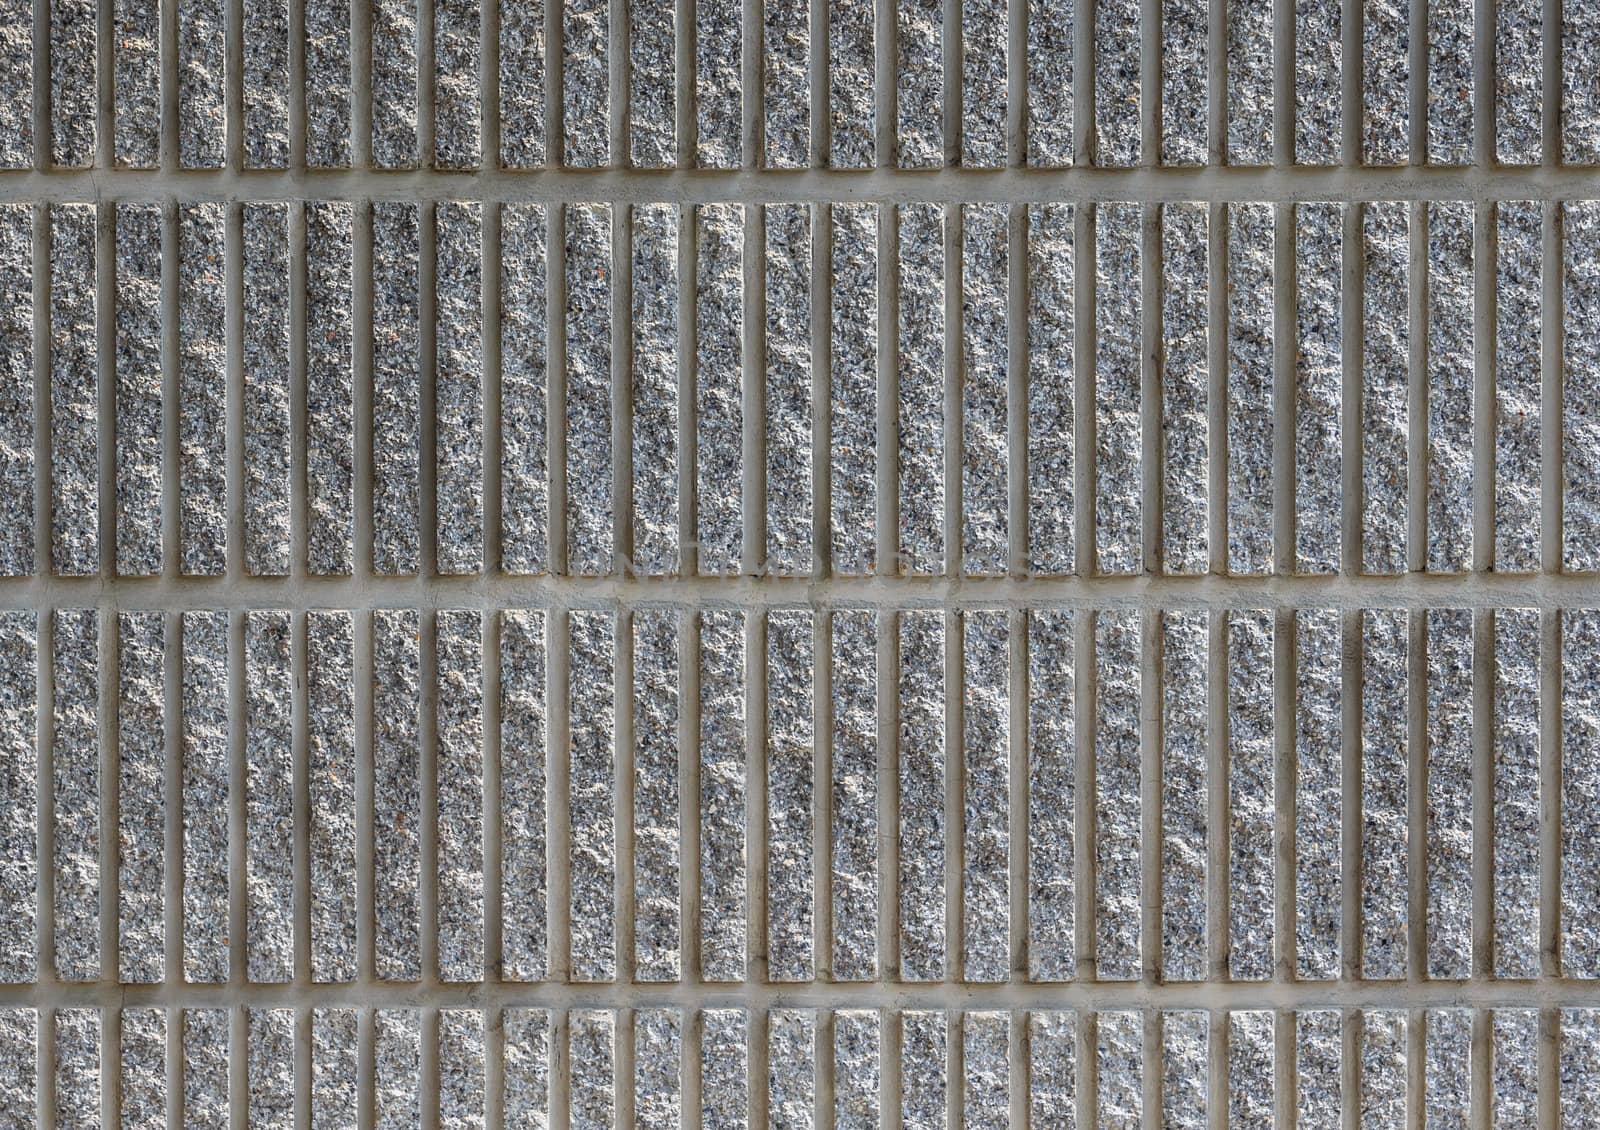 Striped Concrete Wall Background, Closeup by punpleng